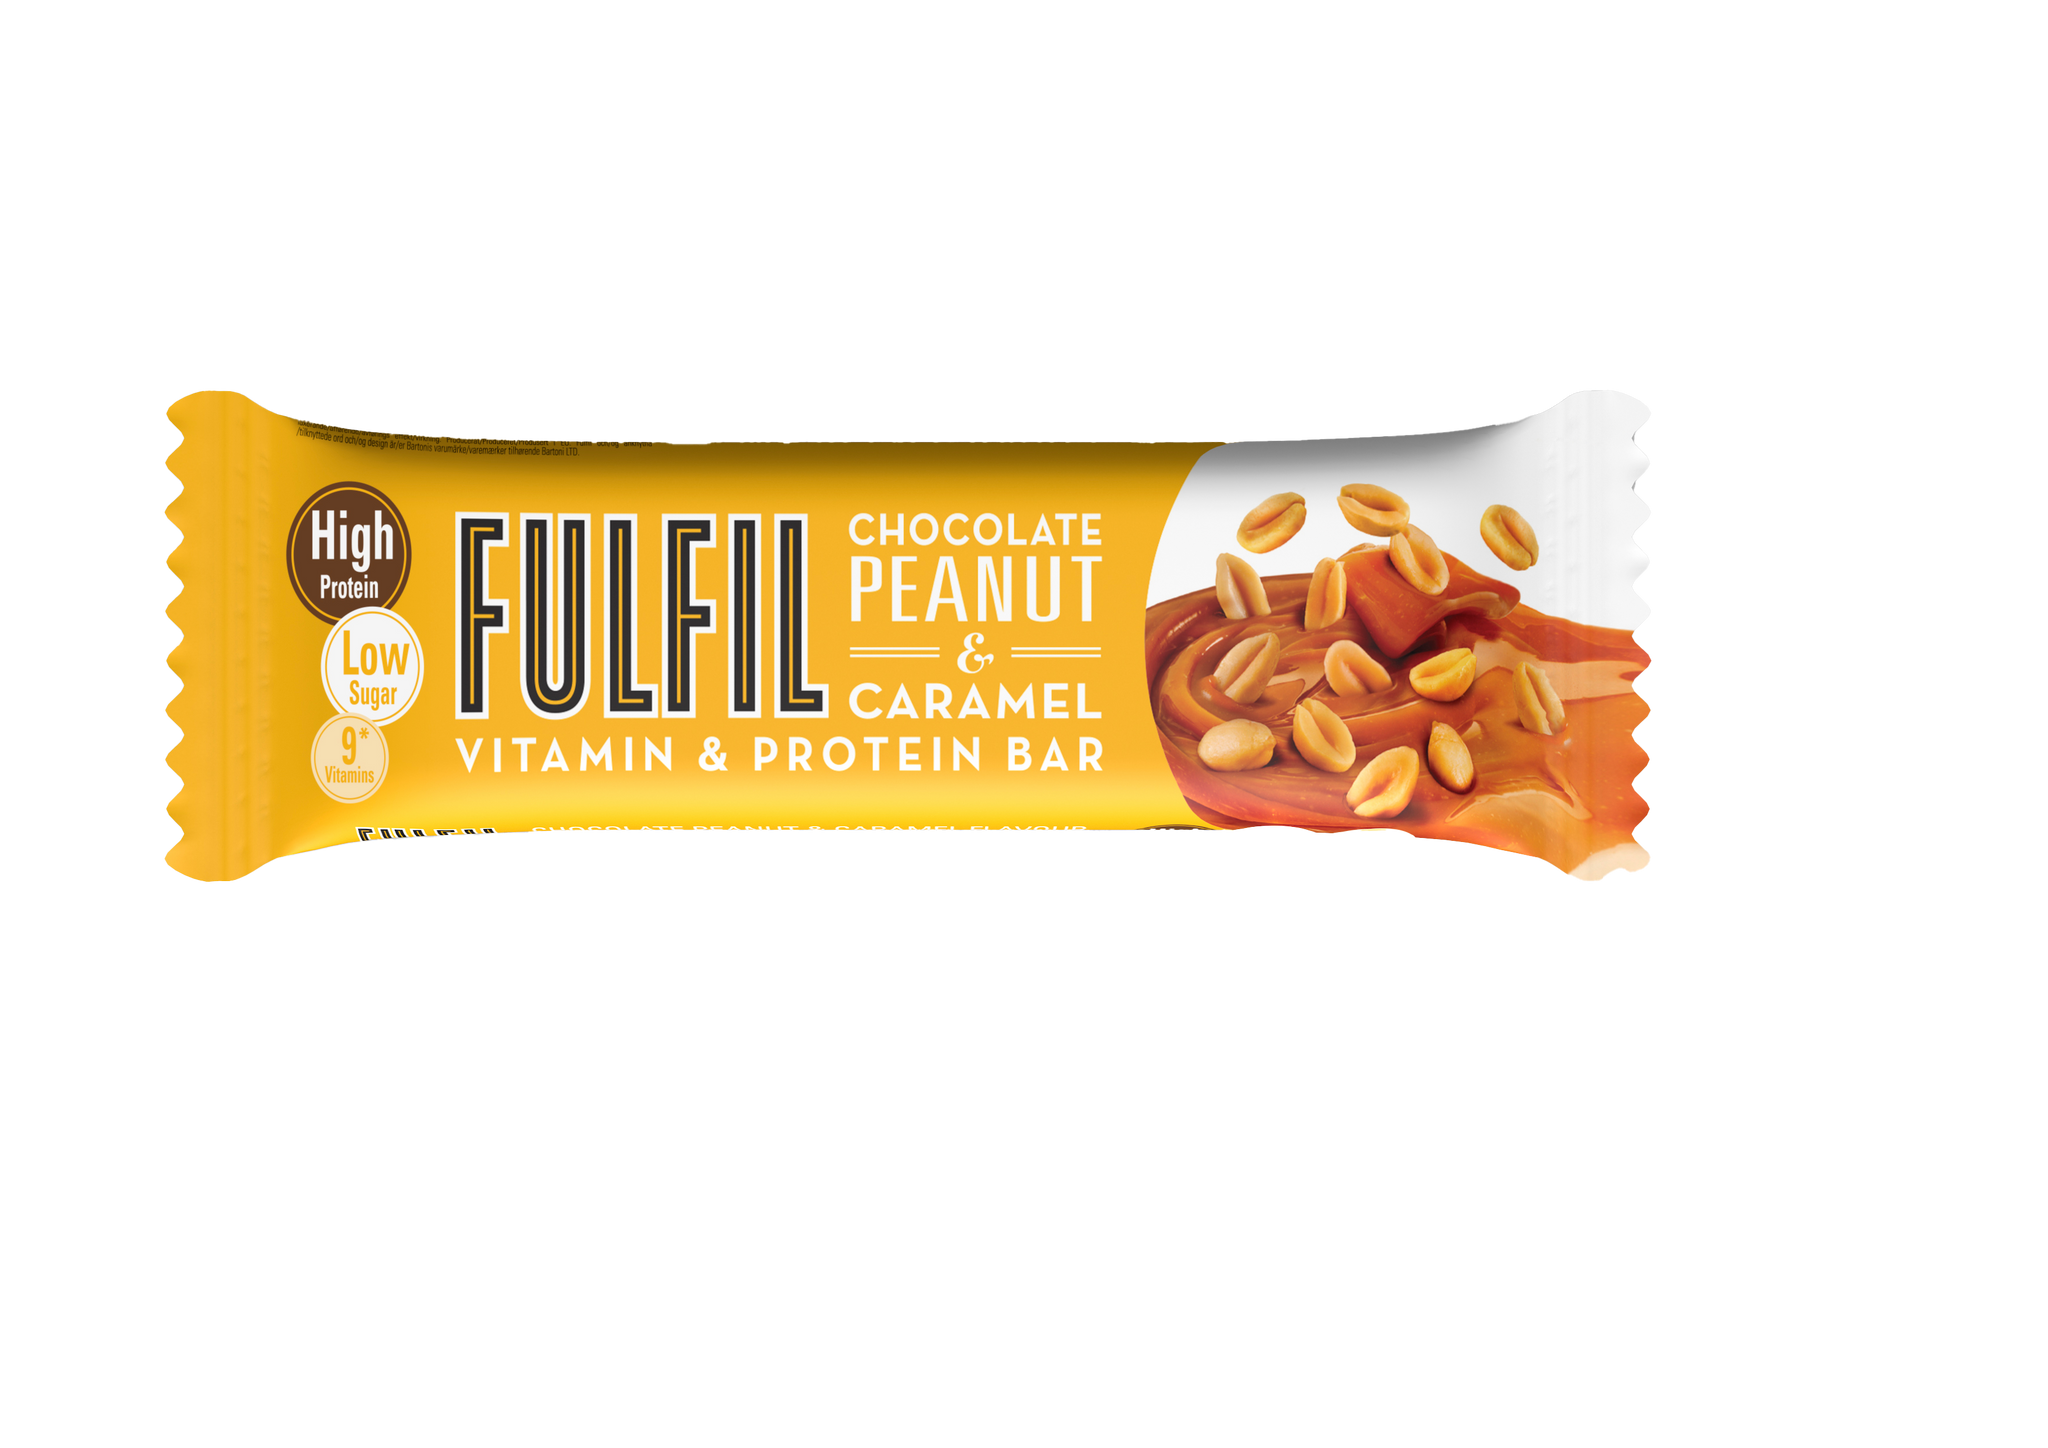 Peanut & Caramel Protein Bar